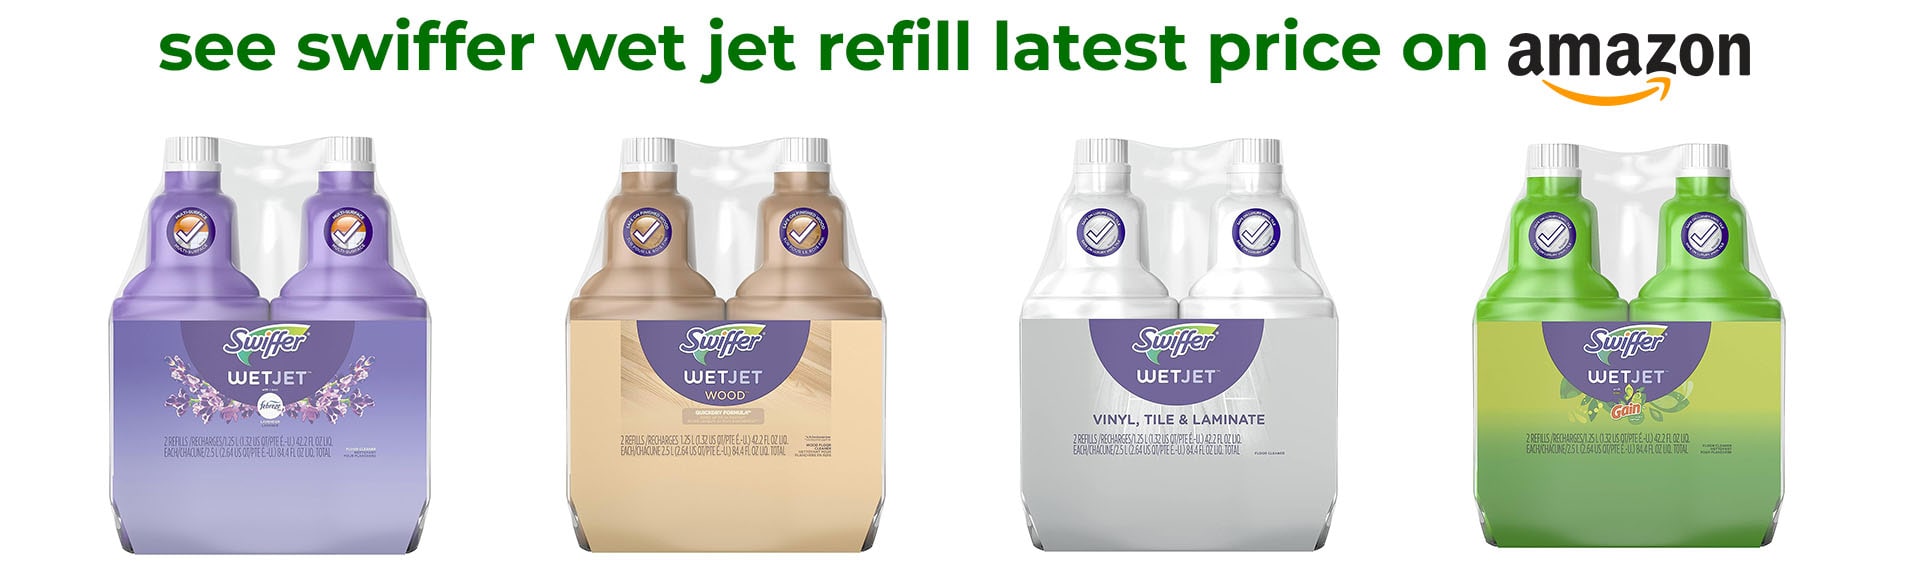 swiffer wet jet pads latest price